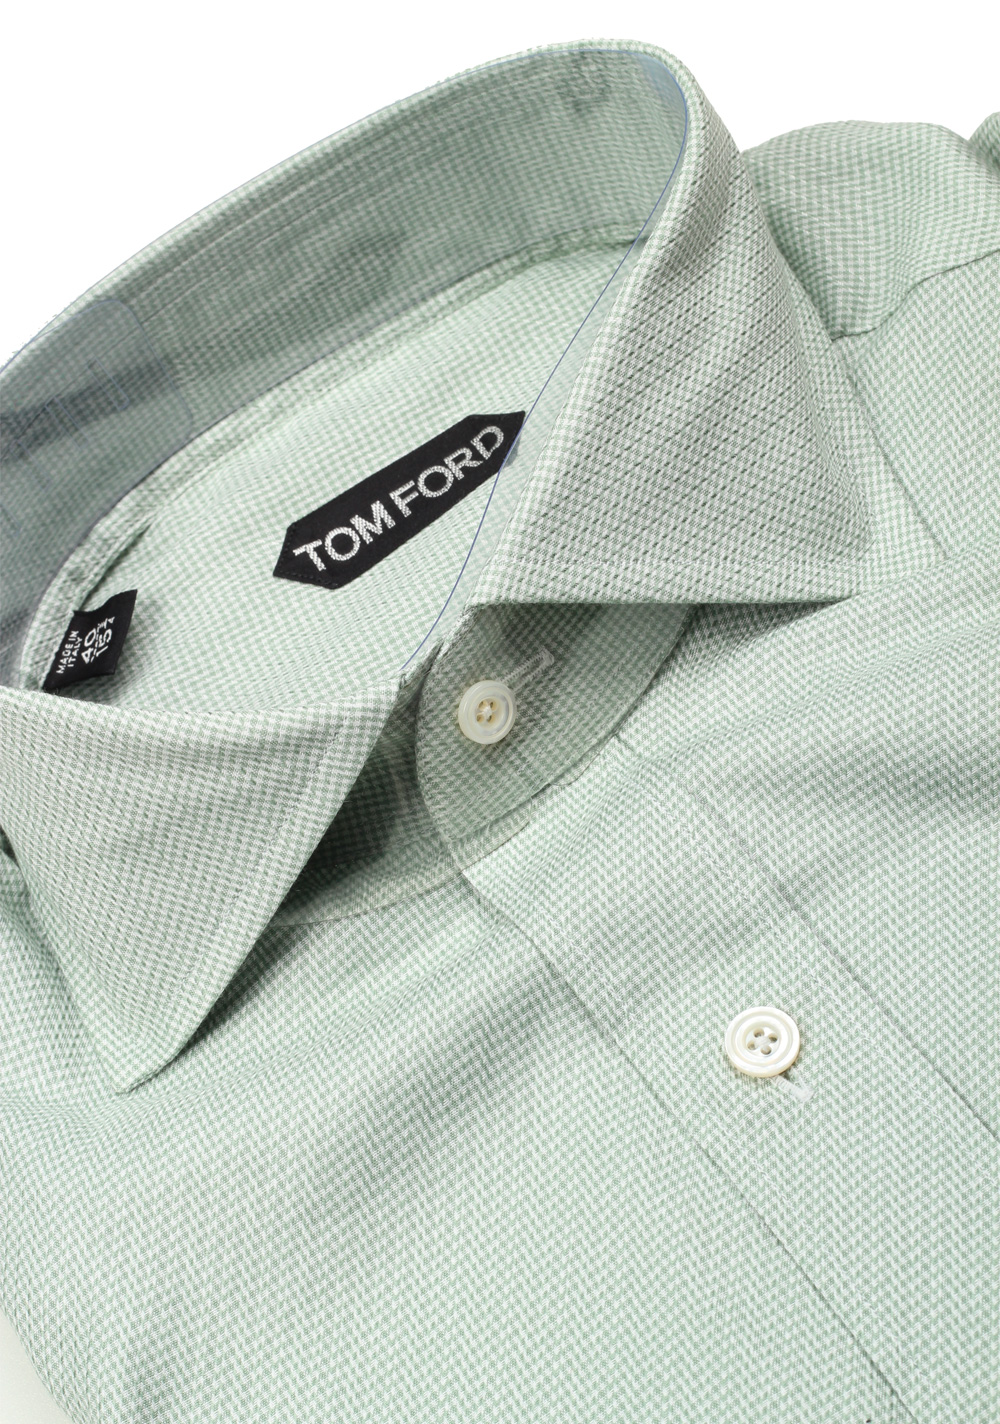 TOM FORD White Green Dress Shirt Size 40 / 15,75 U.S. | Costume Limité